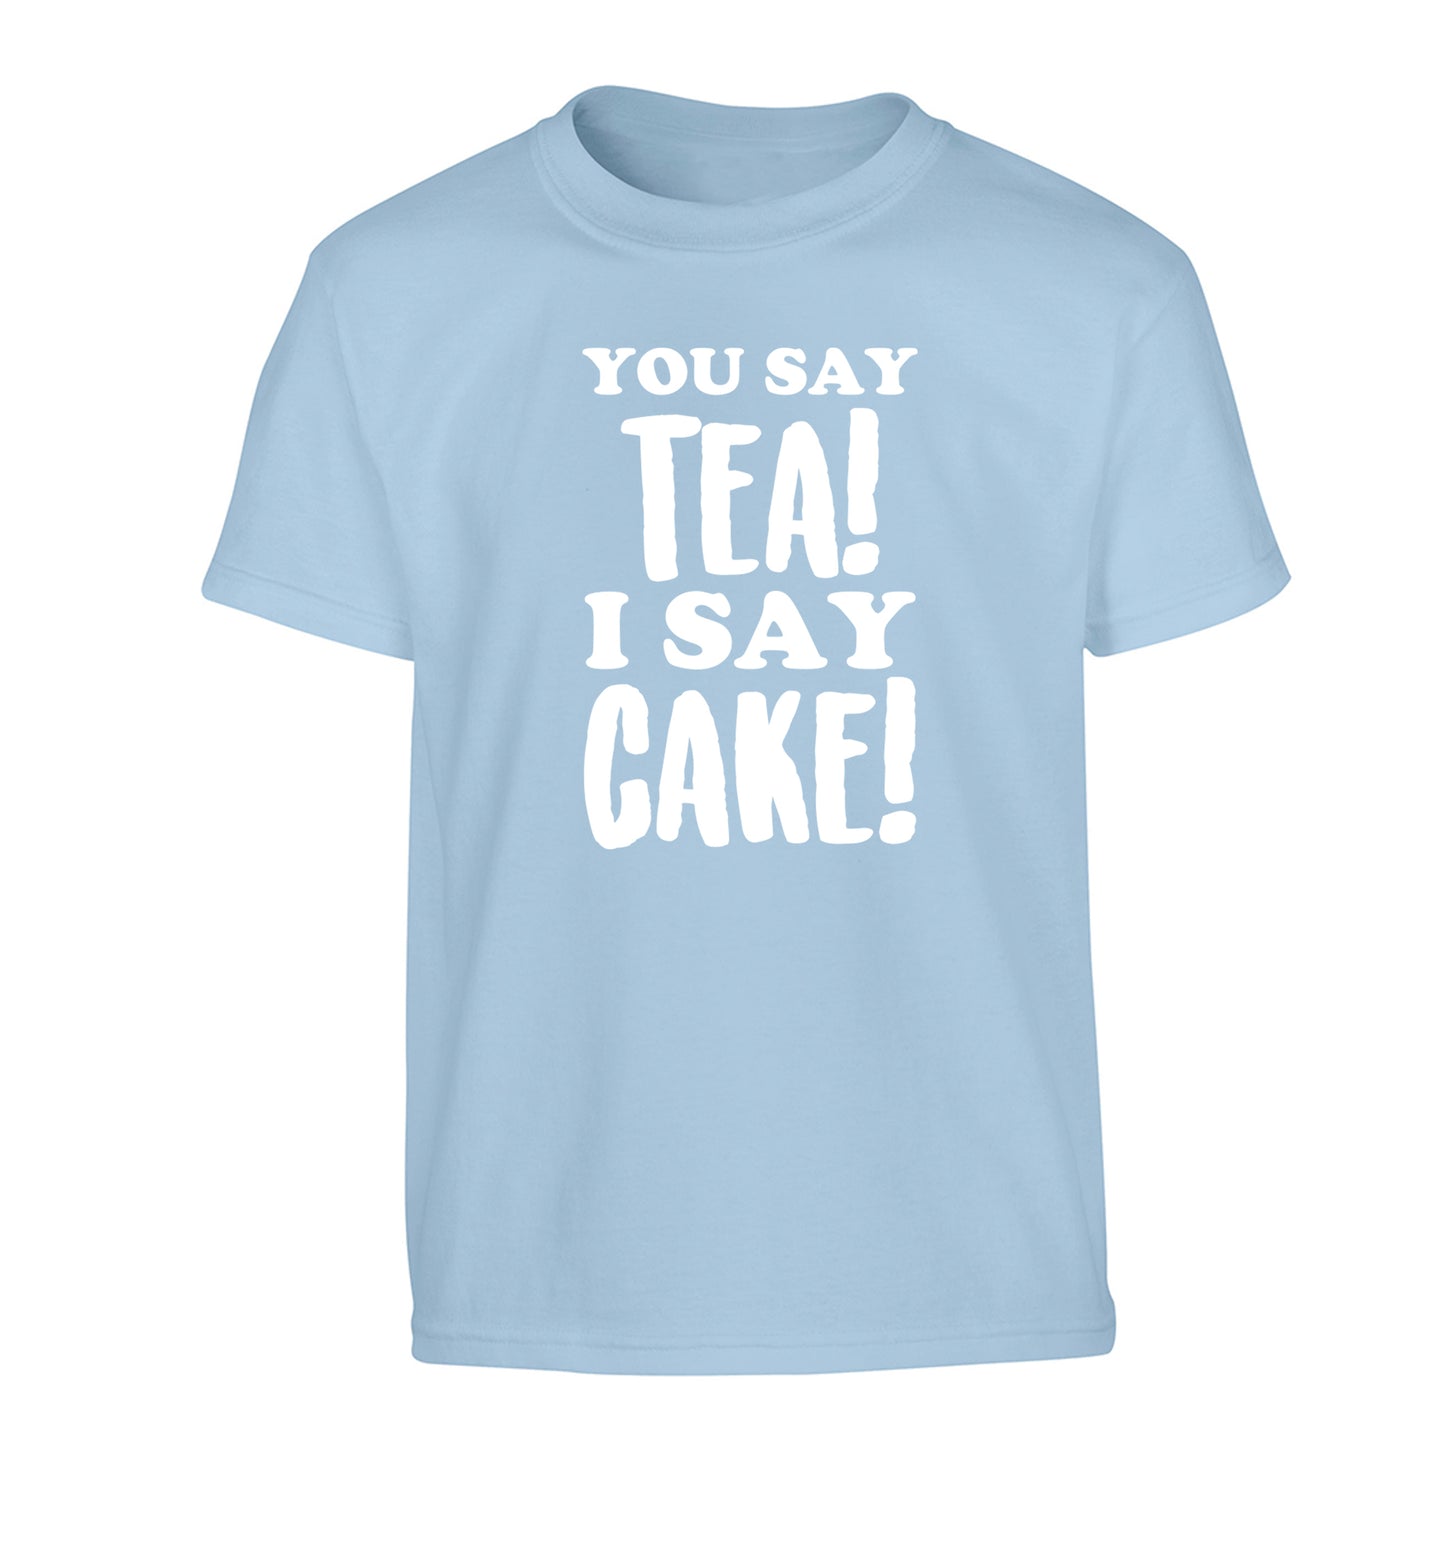 You say tea I say cake! Children's light blue Tshirt 12-14 Years